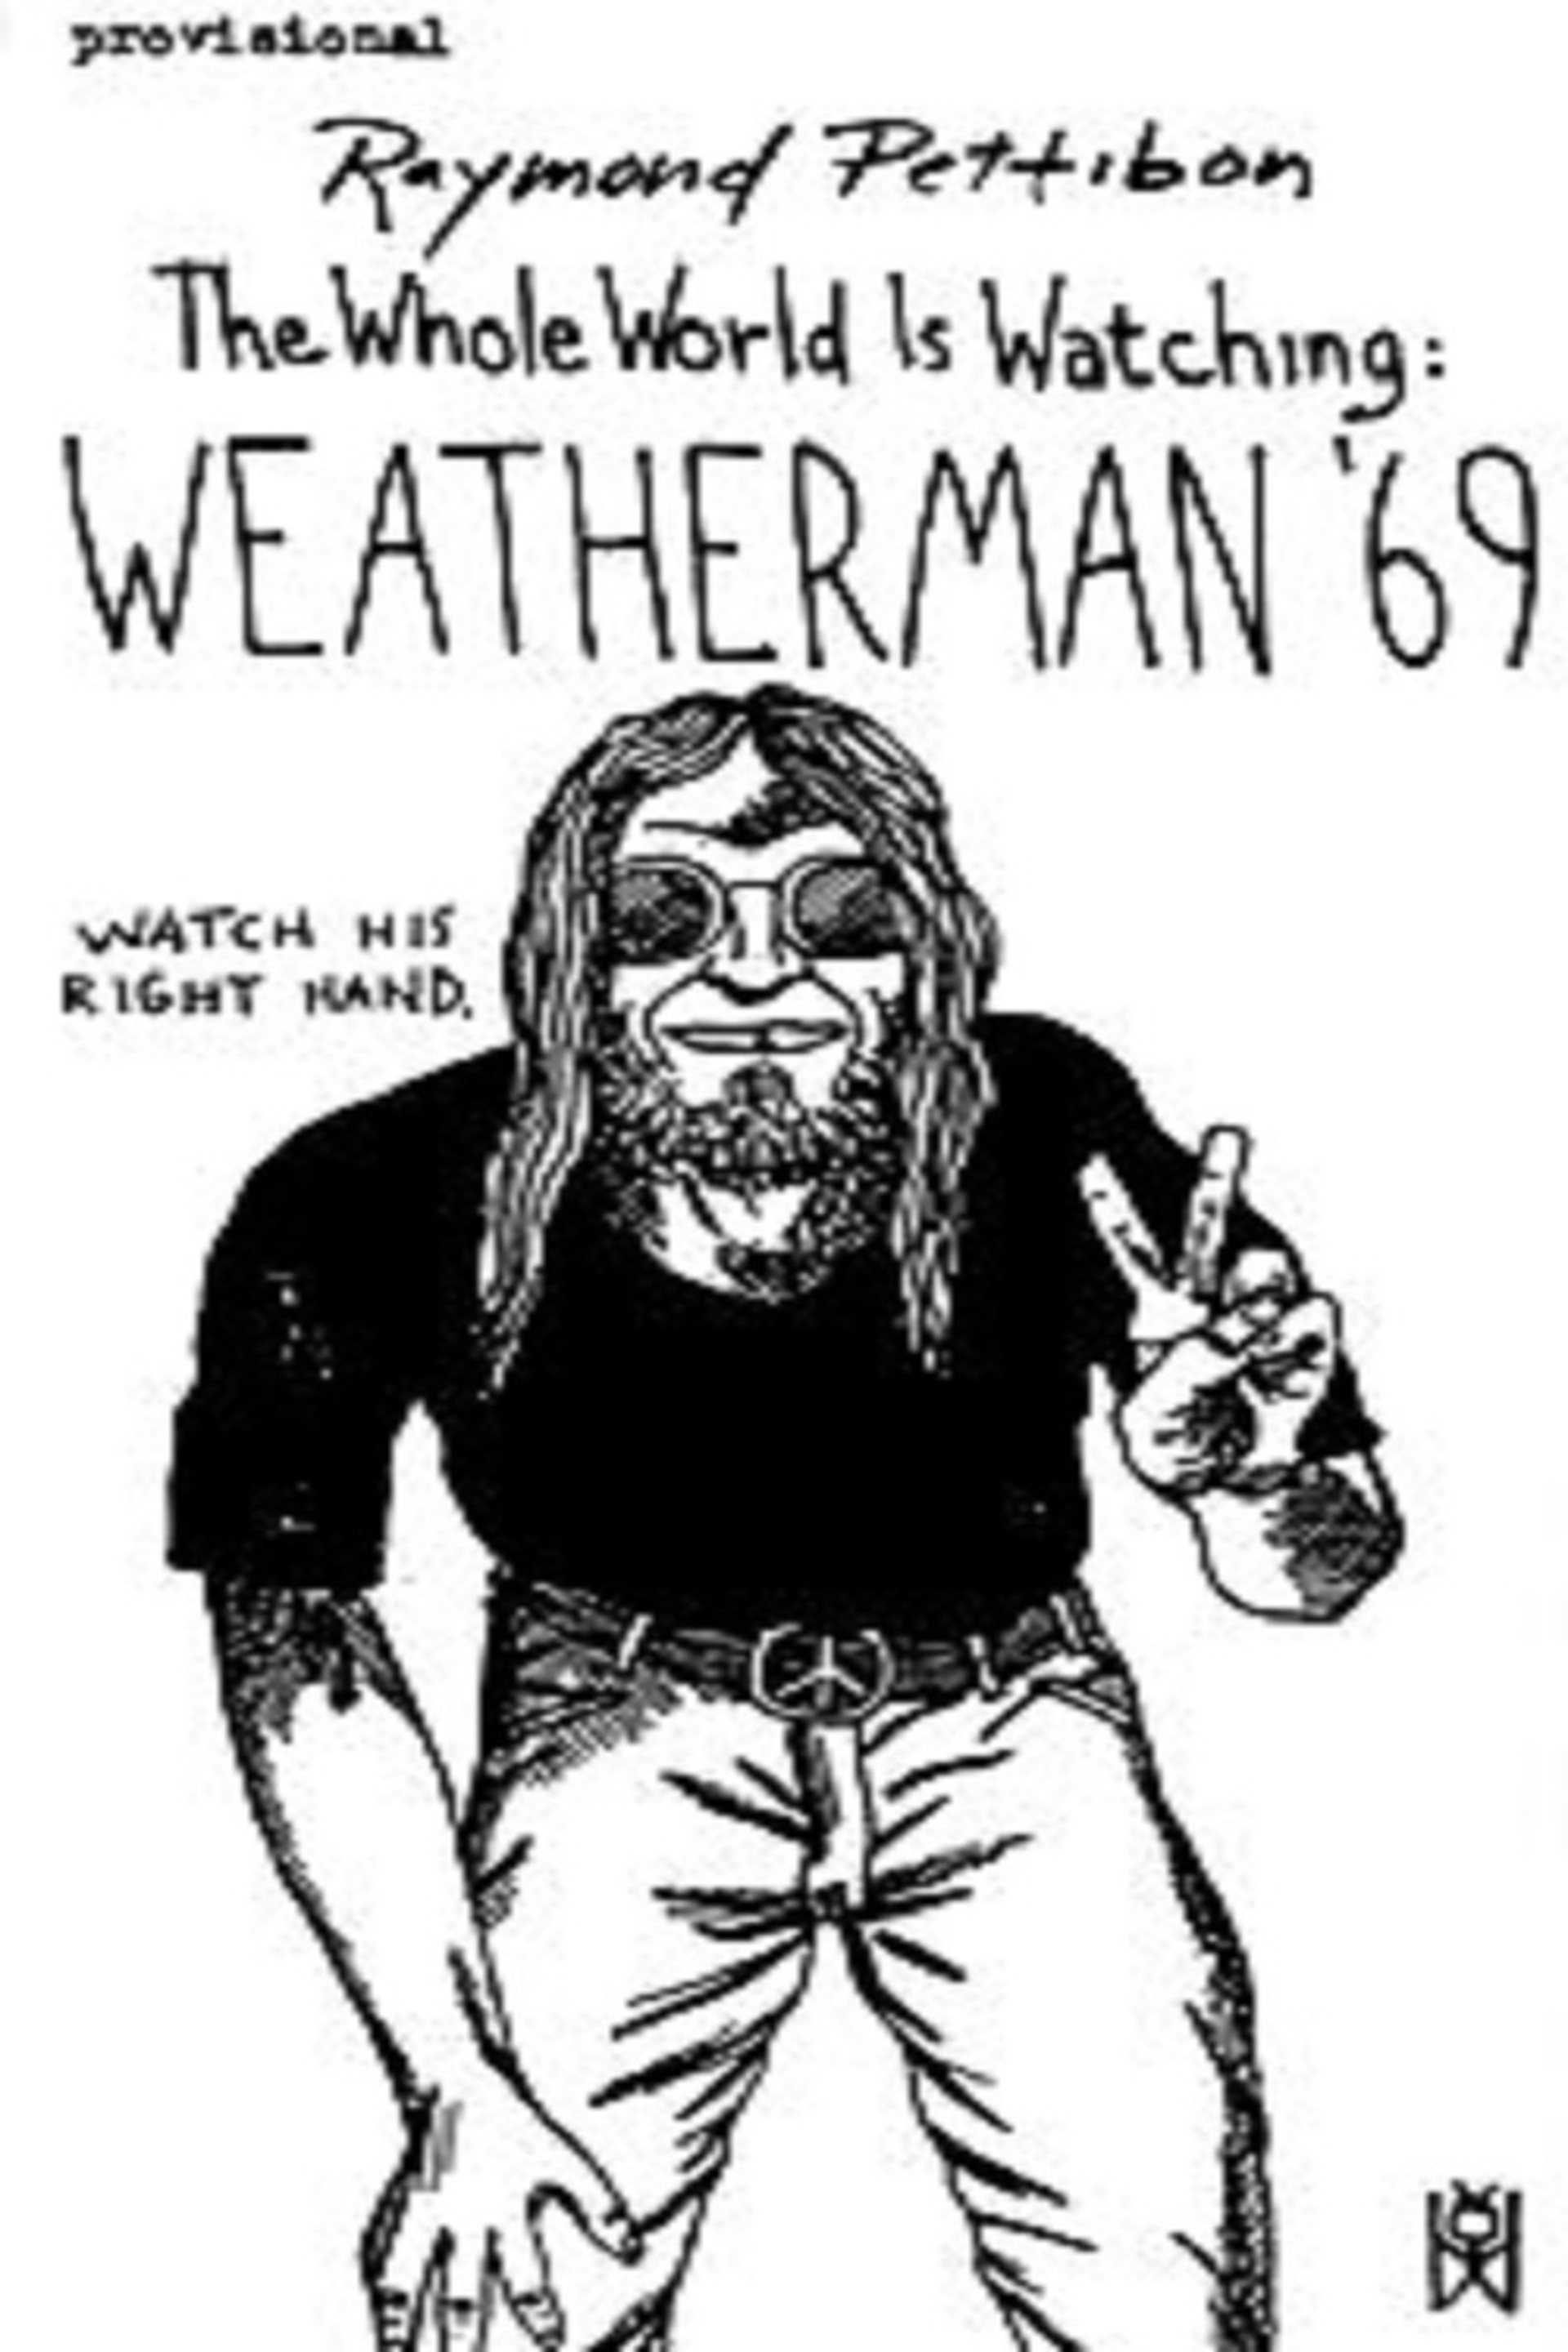 Weatherman '69 (1989) Screenshot 1 